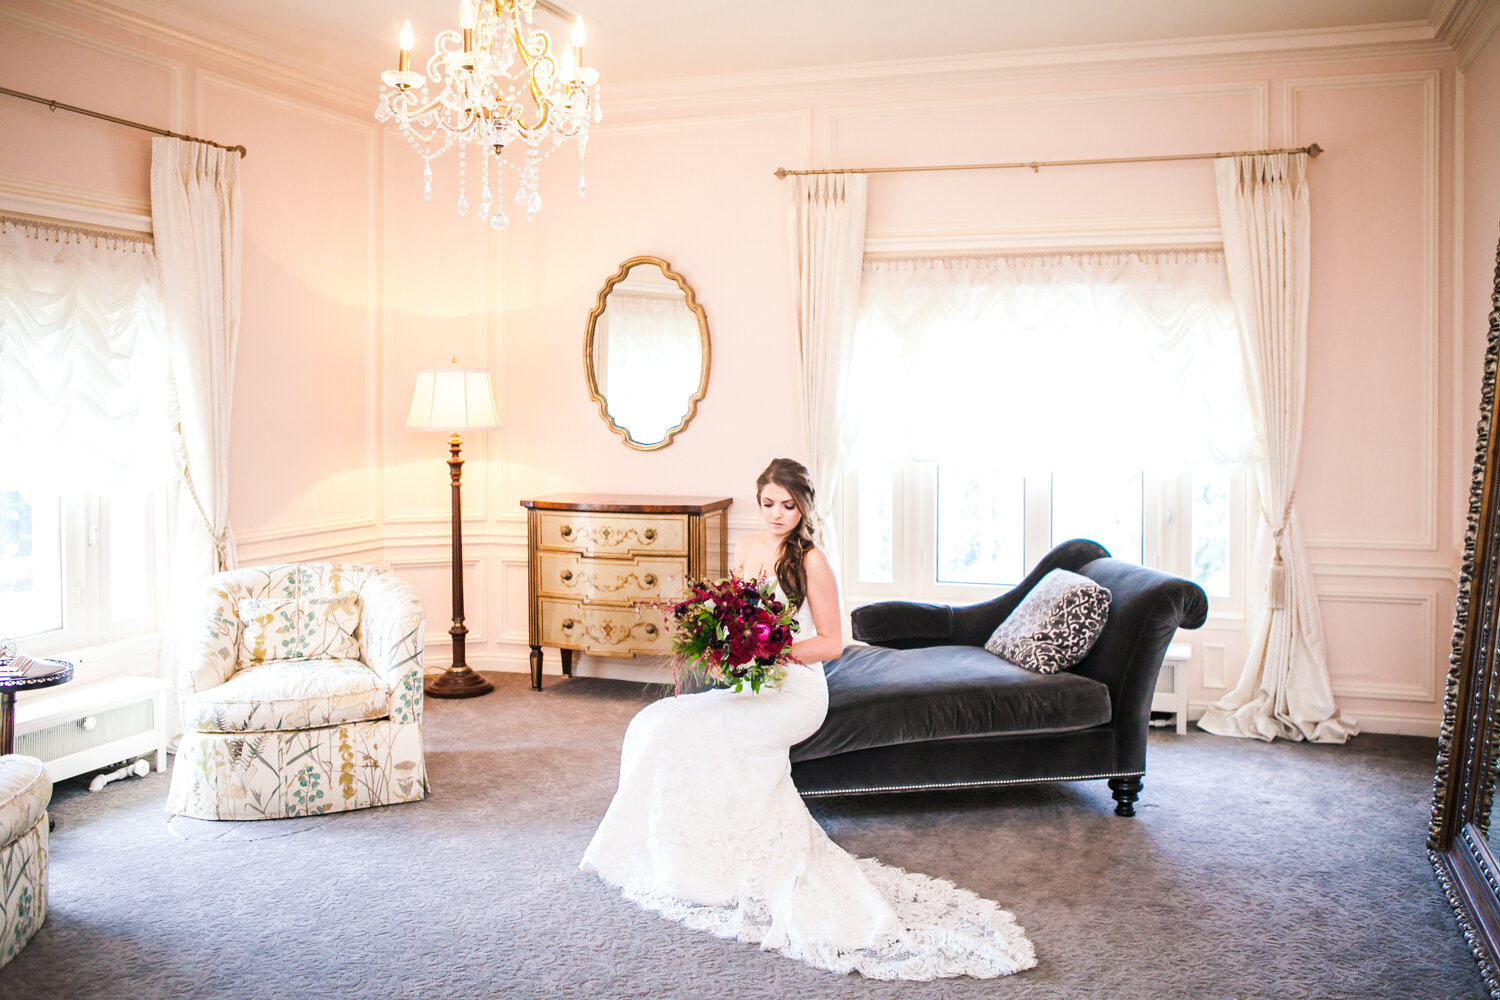  Bride in bridal suite at Highlands Ranch Mansion.&nbsp;Photographed by JMGant Photography, Denver Colorado wedding photographer.&nbsp; 